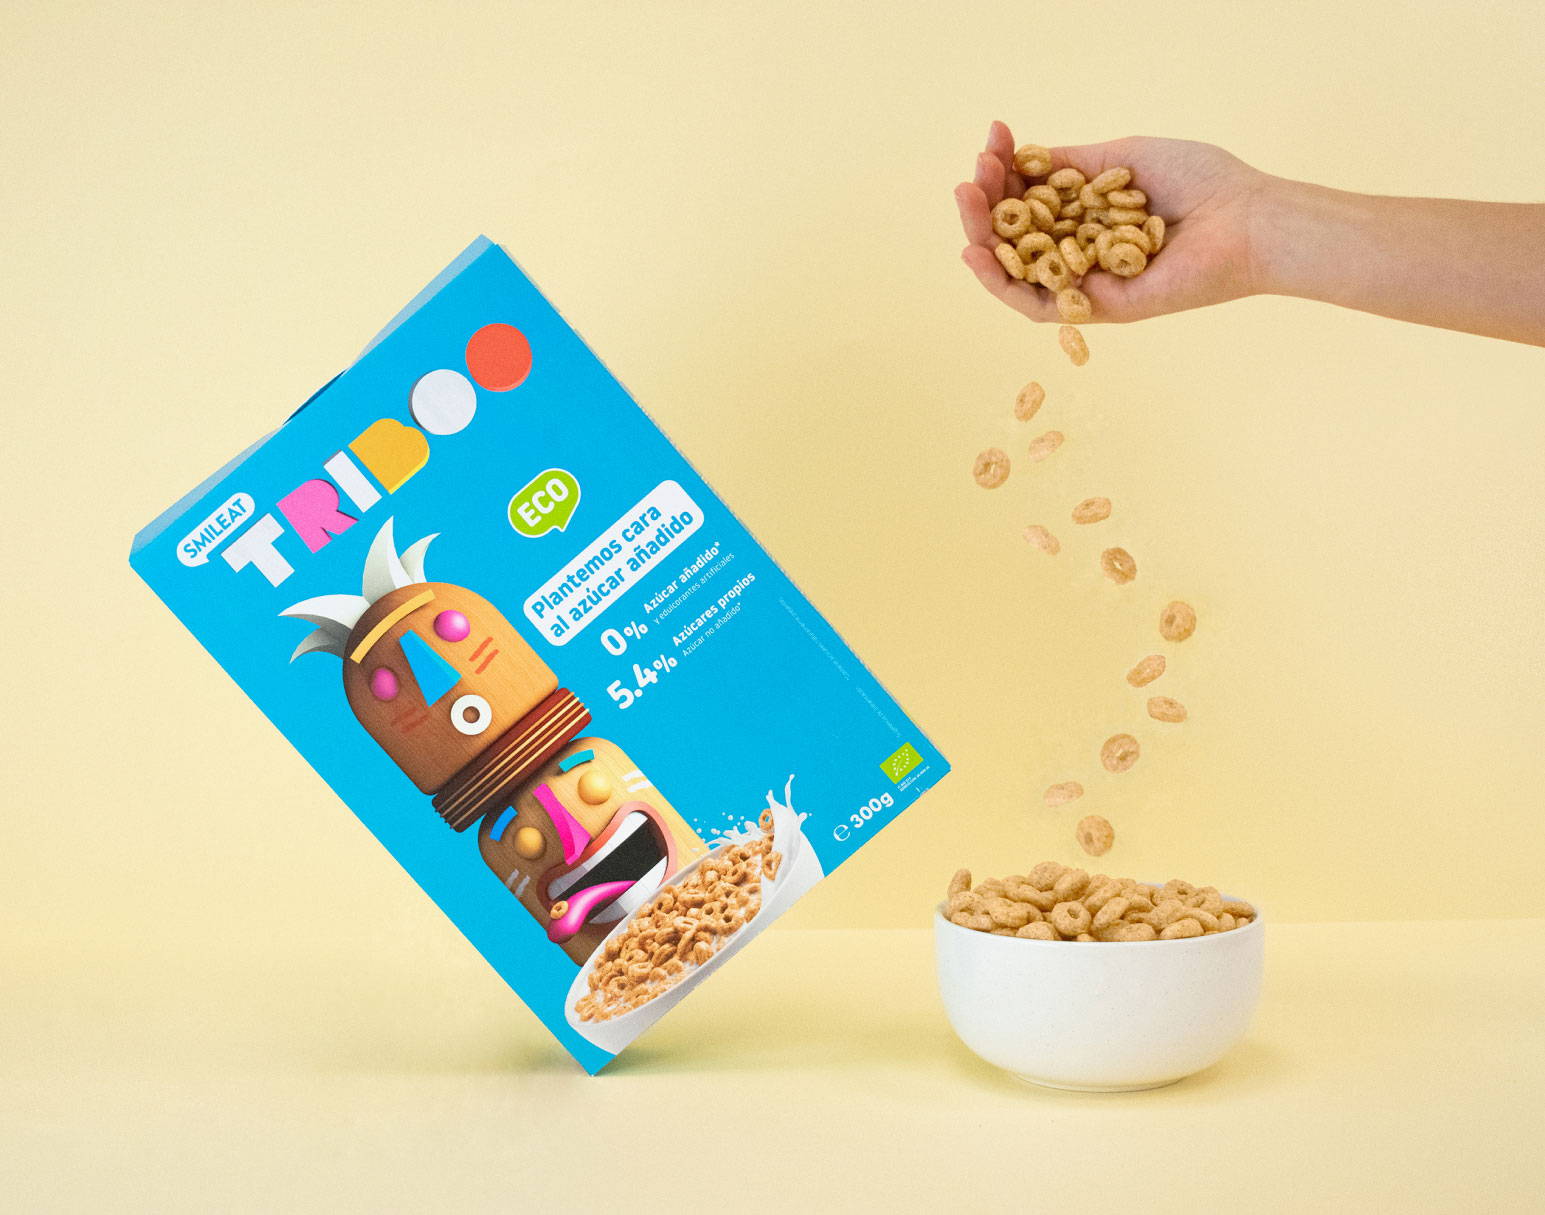 Smileat Triboo Cereales Desayuno Eco 300 gr - Atida